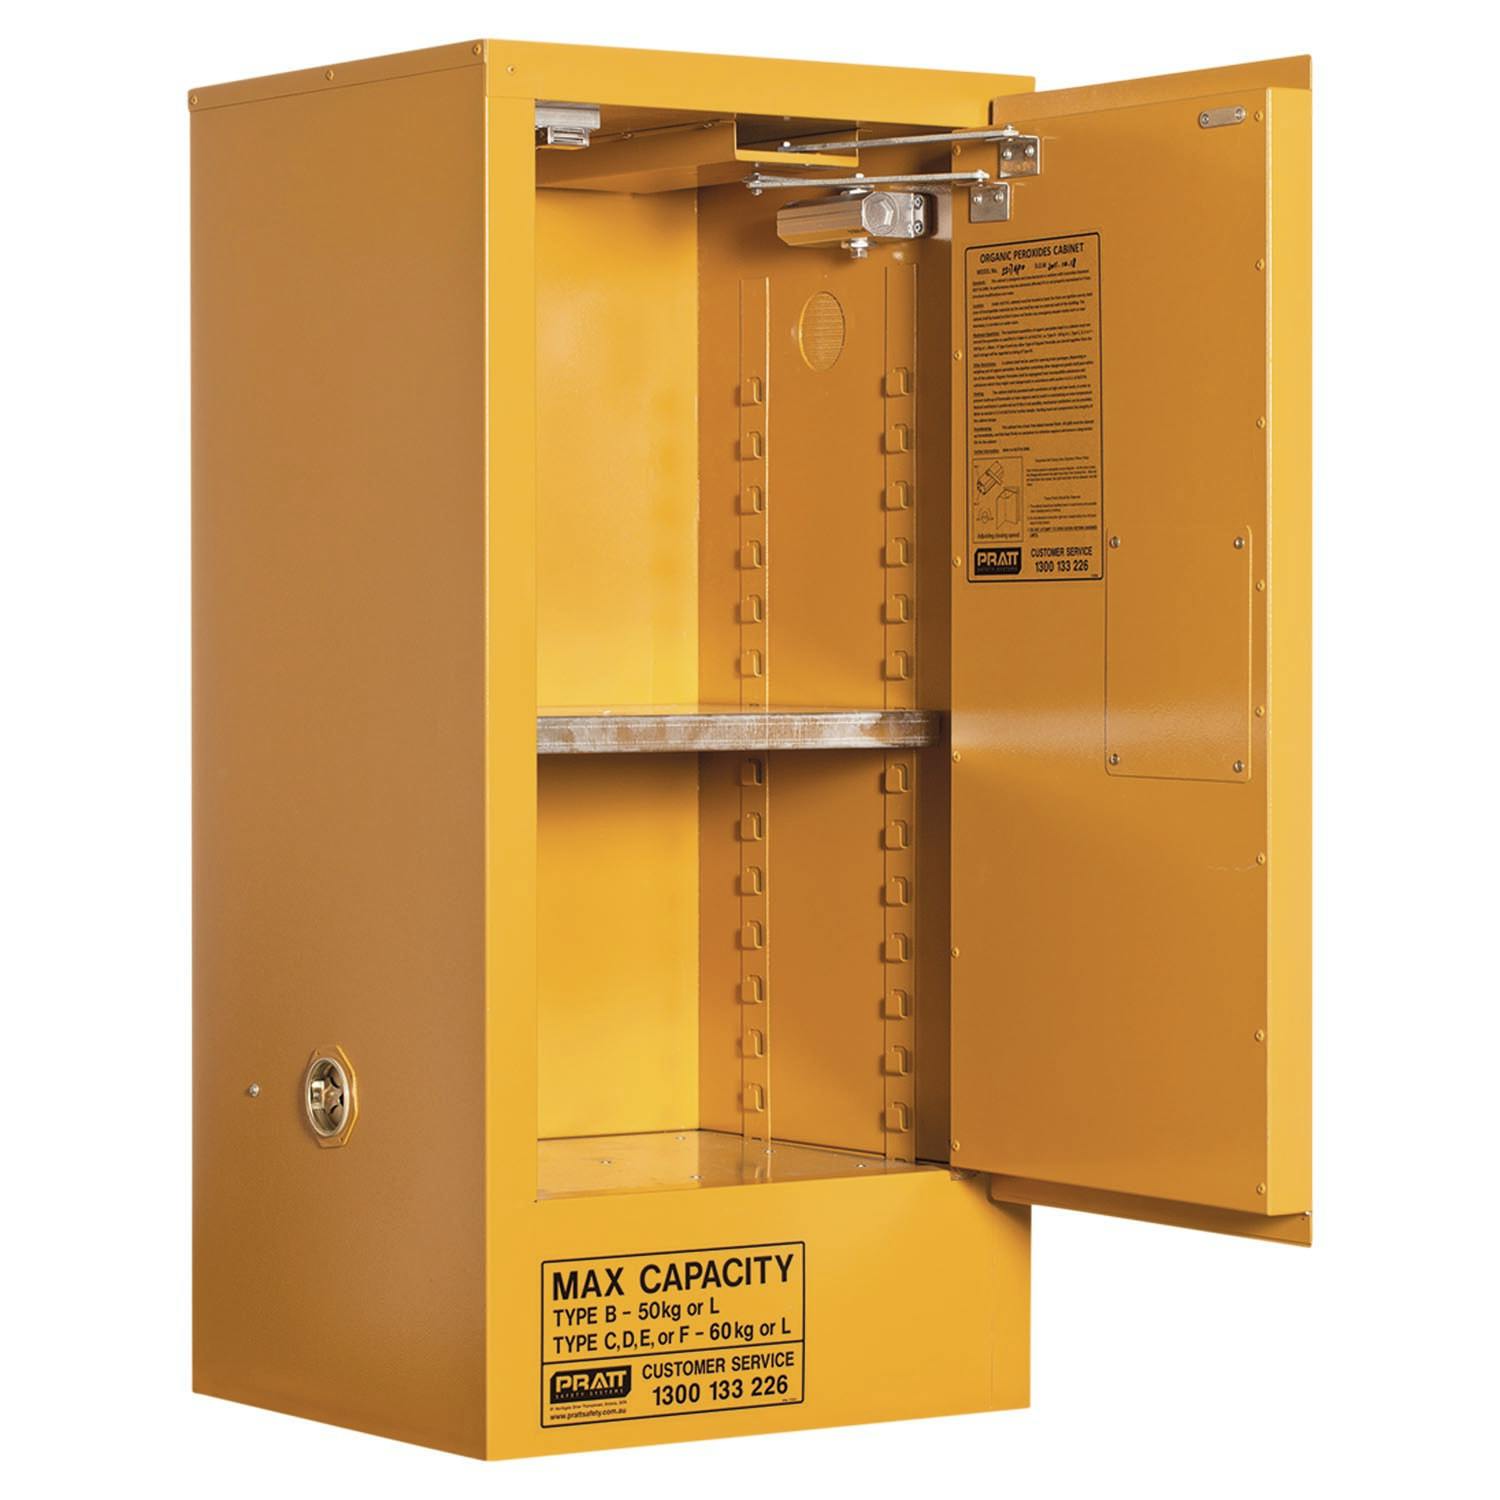 Pratt Organic Peroxide Storage Cabinet: 60L - 1 Door - 2 Shelves